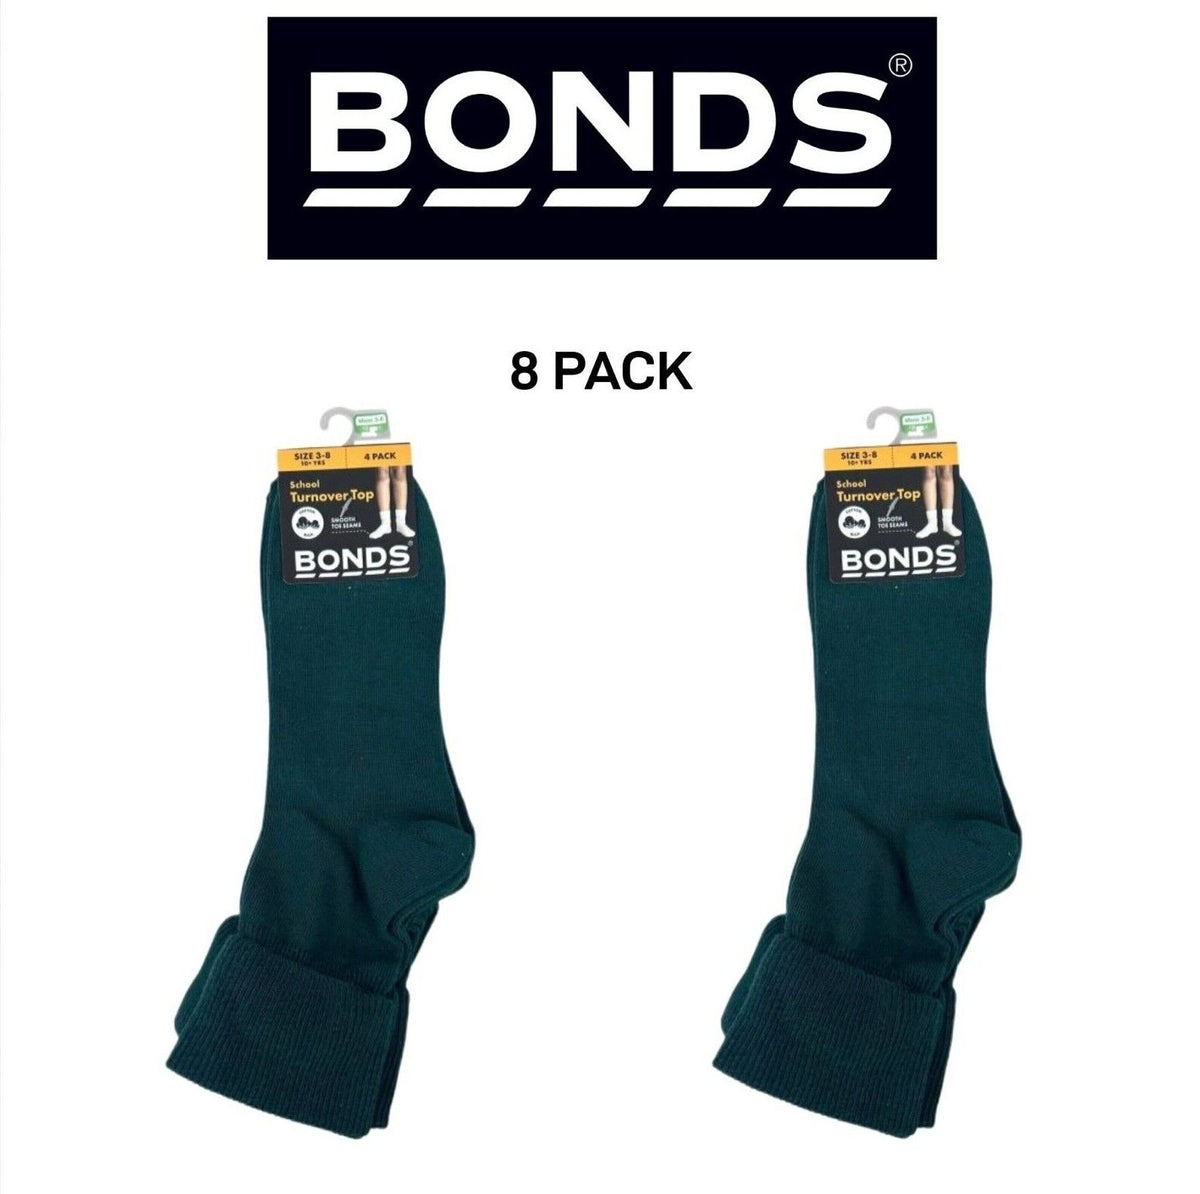 Bonds Kids School Turnover Top Socks Soft Cotton & Fine Toe Seams 8 Pack R5134O